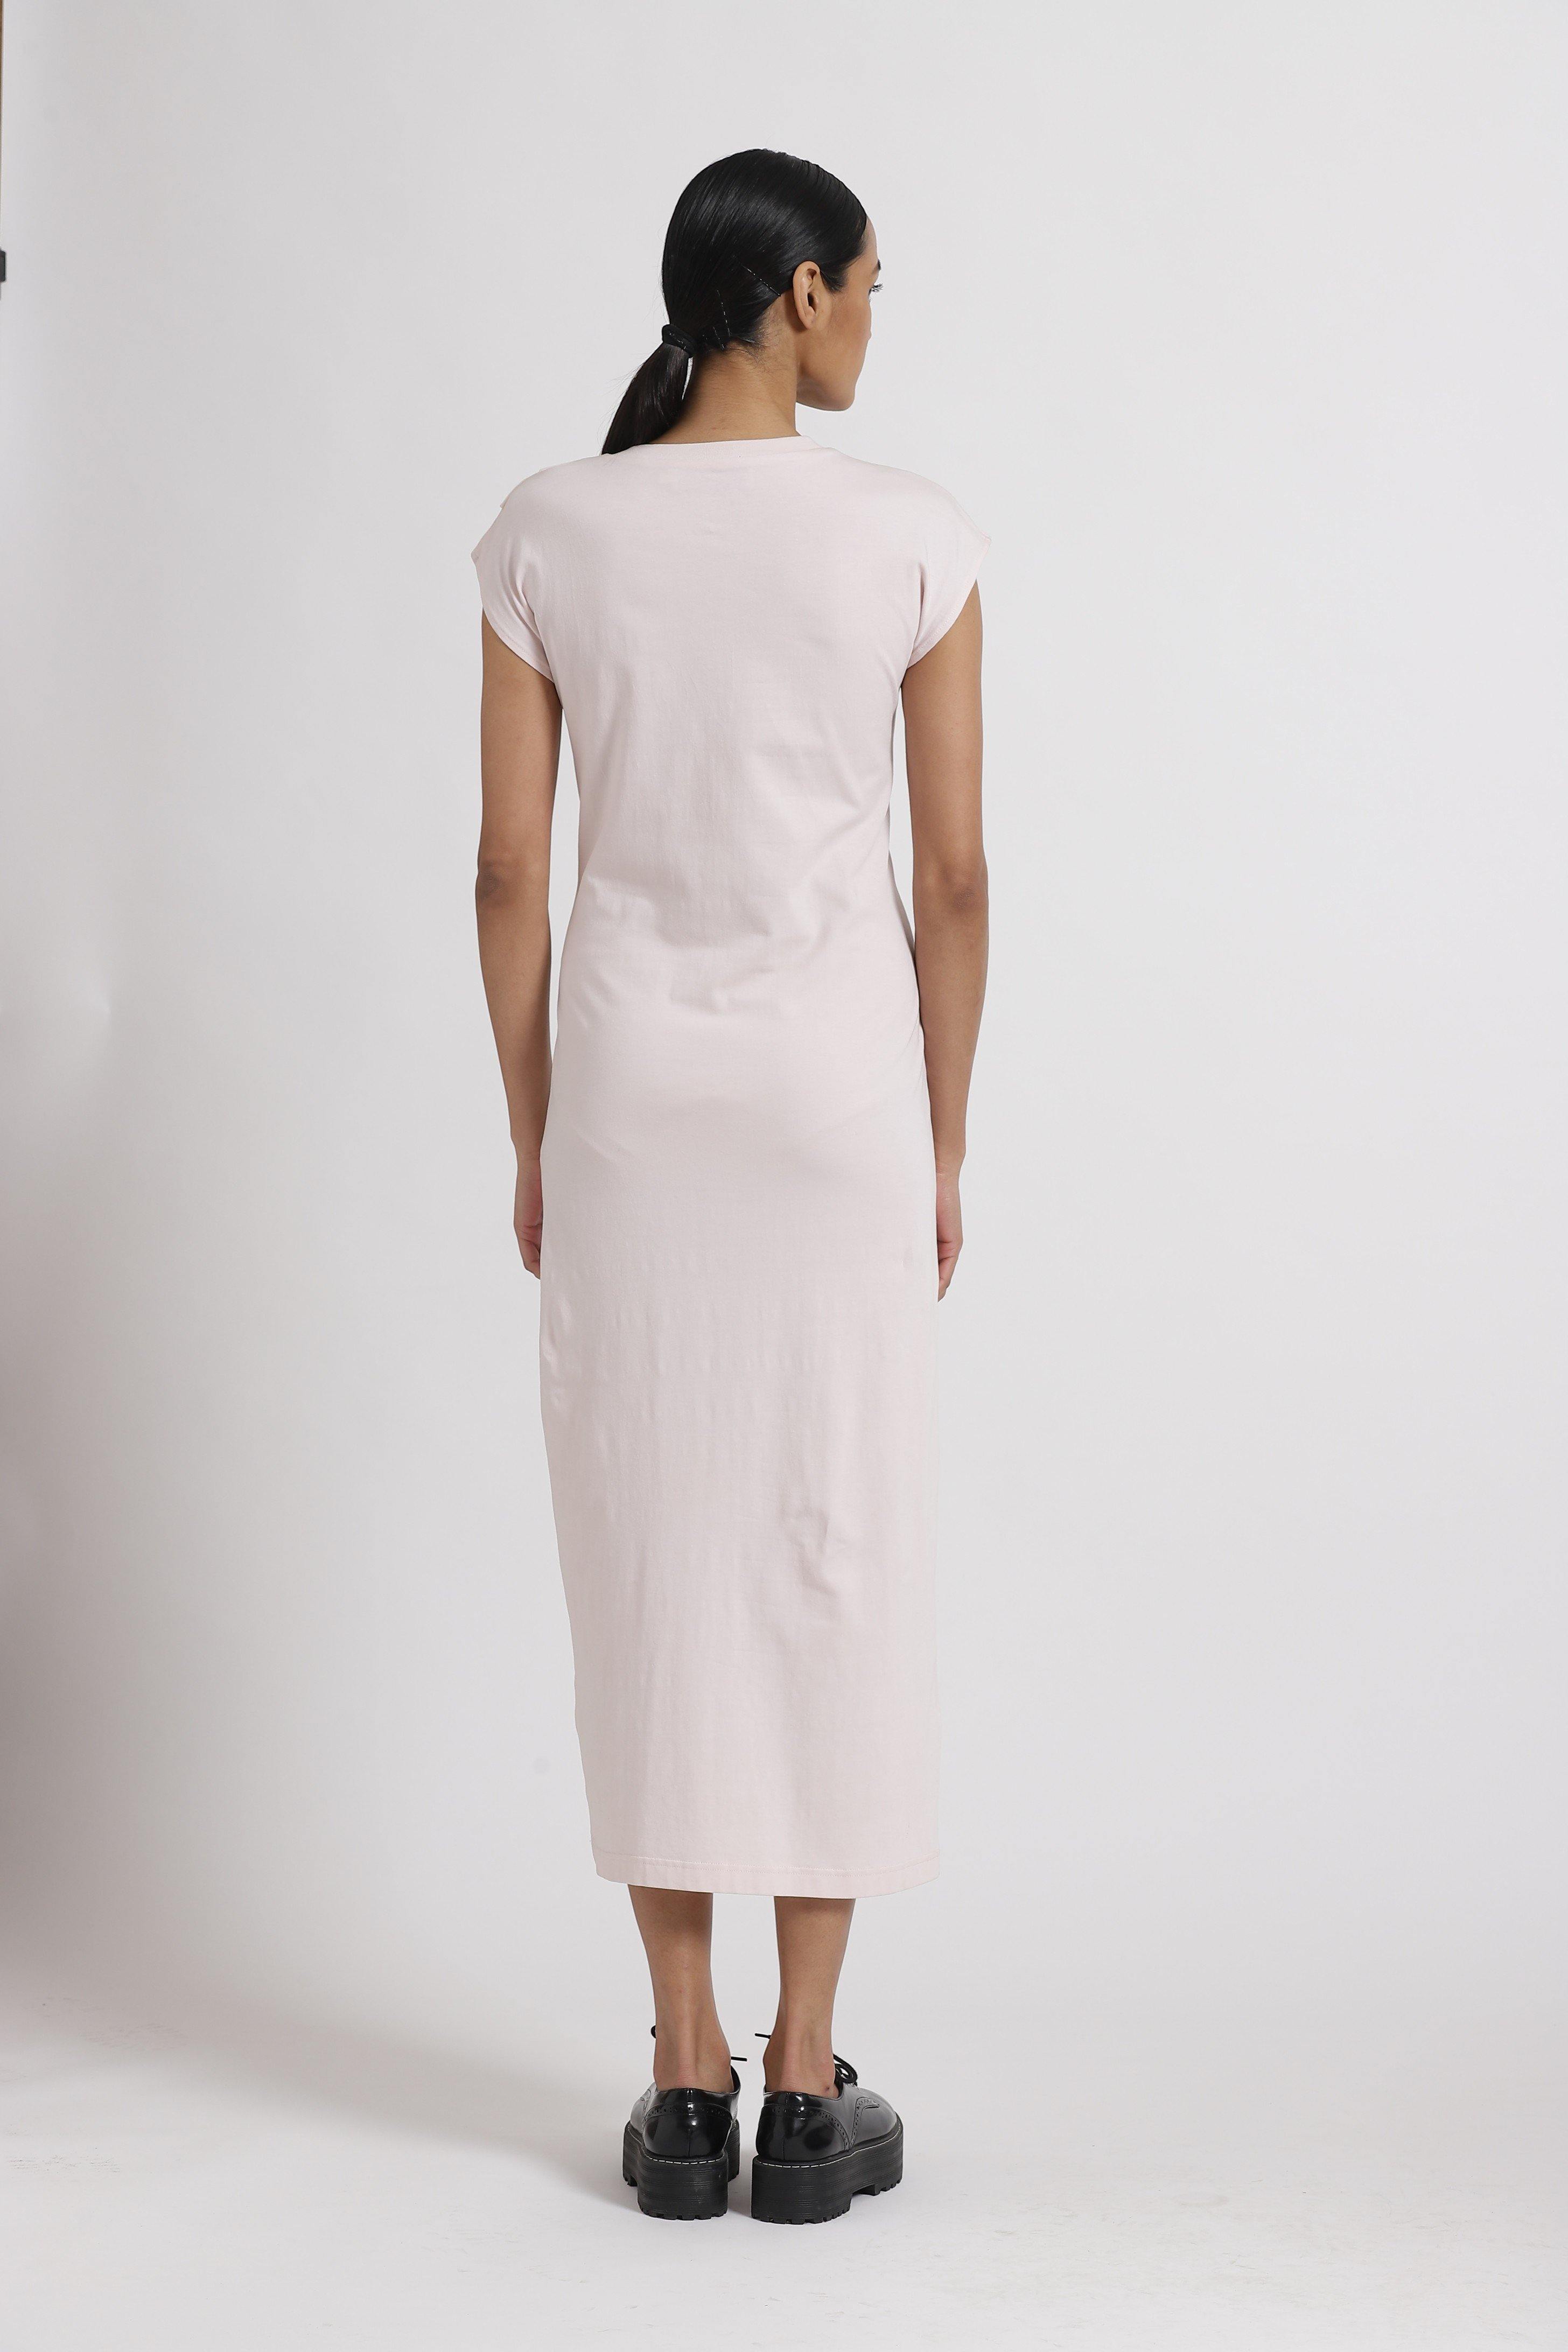 Amanita Dress - Genes online store 2020